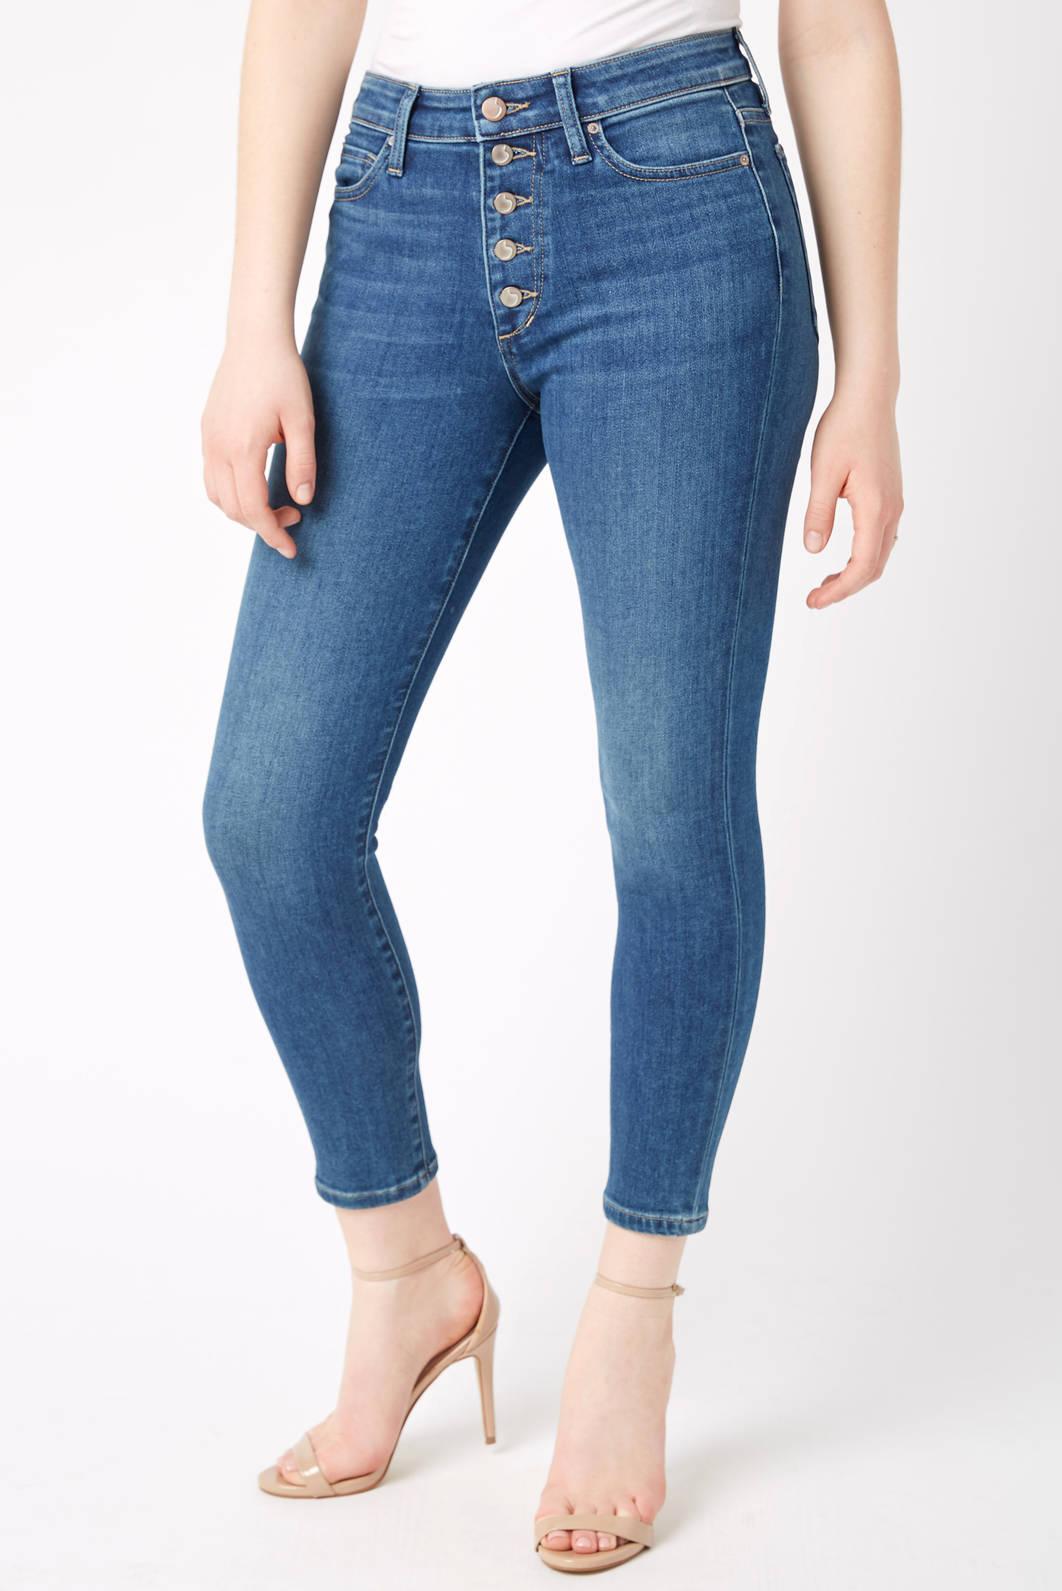 Joe S Jeans Cotton The Charlie Hi Rise Skinny Crop Jean In Nessa Medium